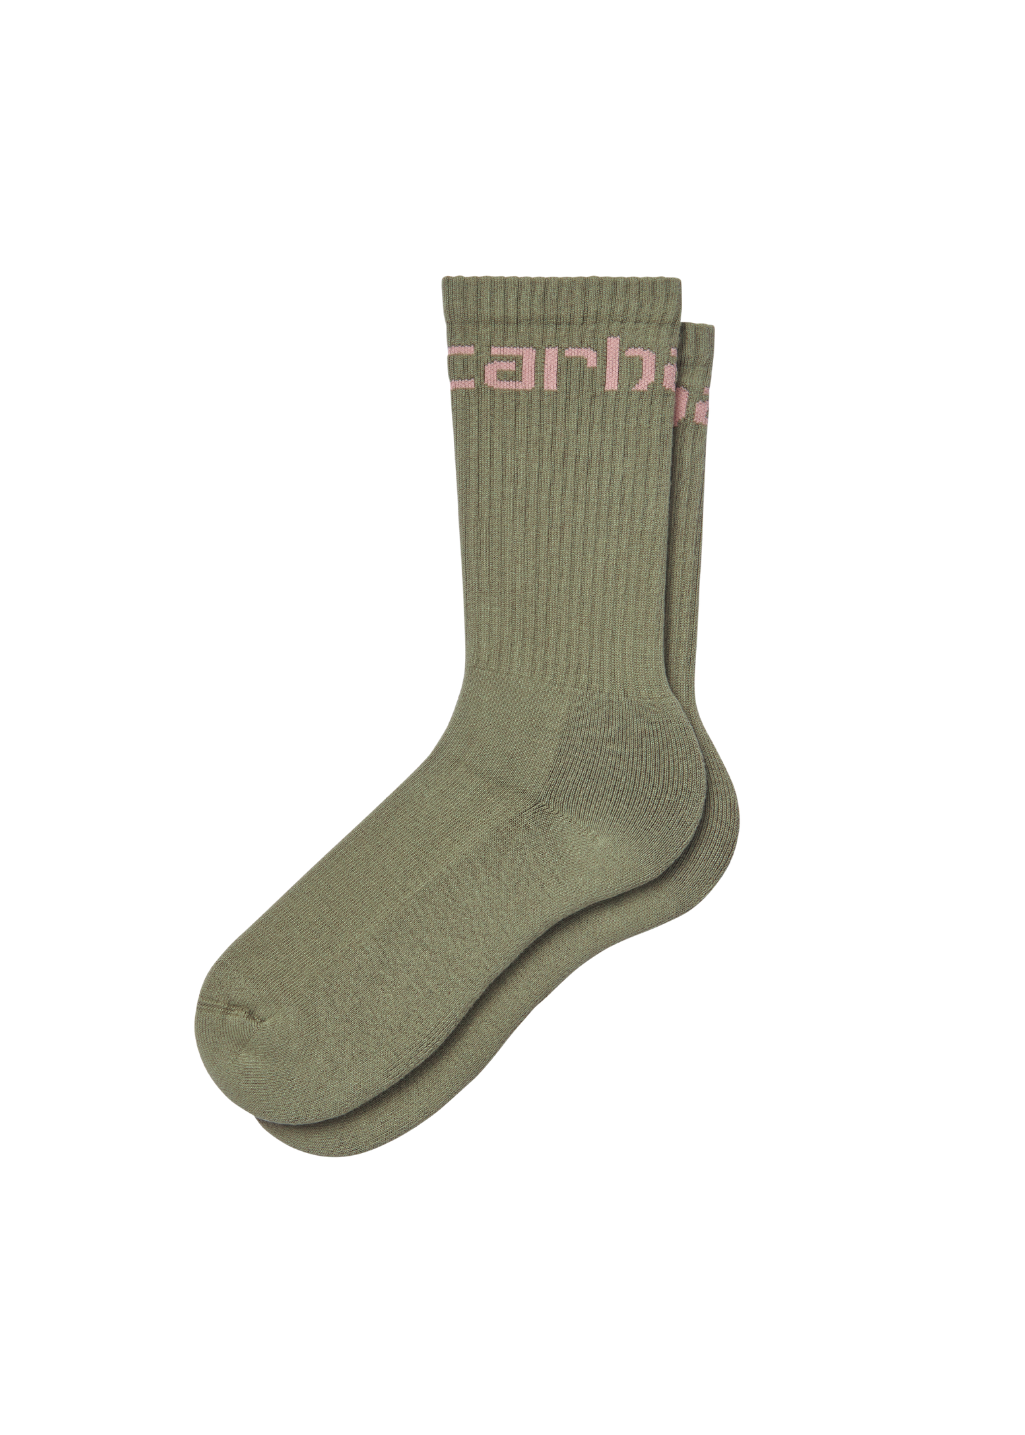 Carhartt WIP - Carhartt Socks - Dundee/Glassy Pink - Hardpressed Print Studio Inc.